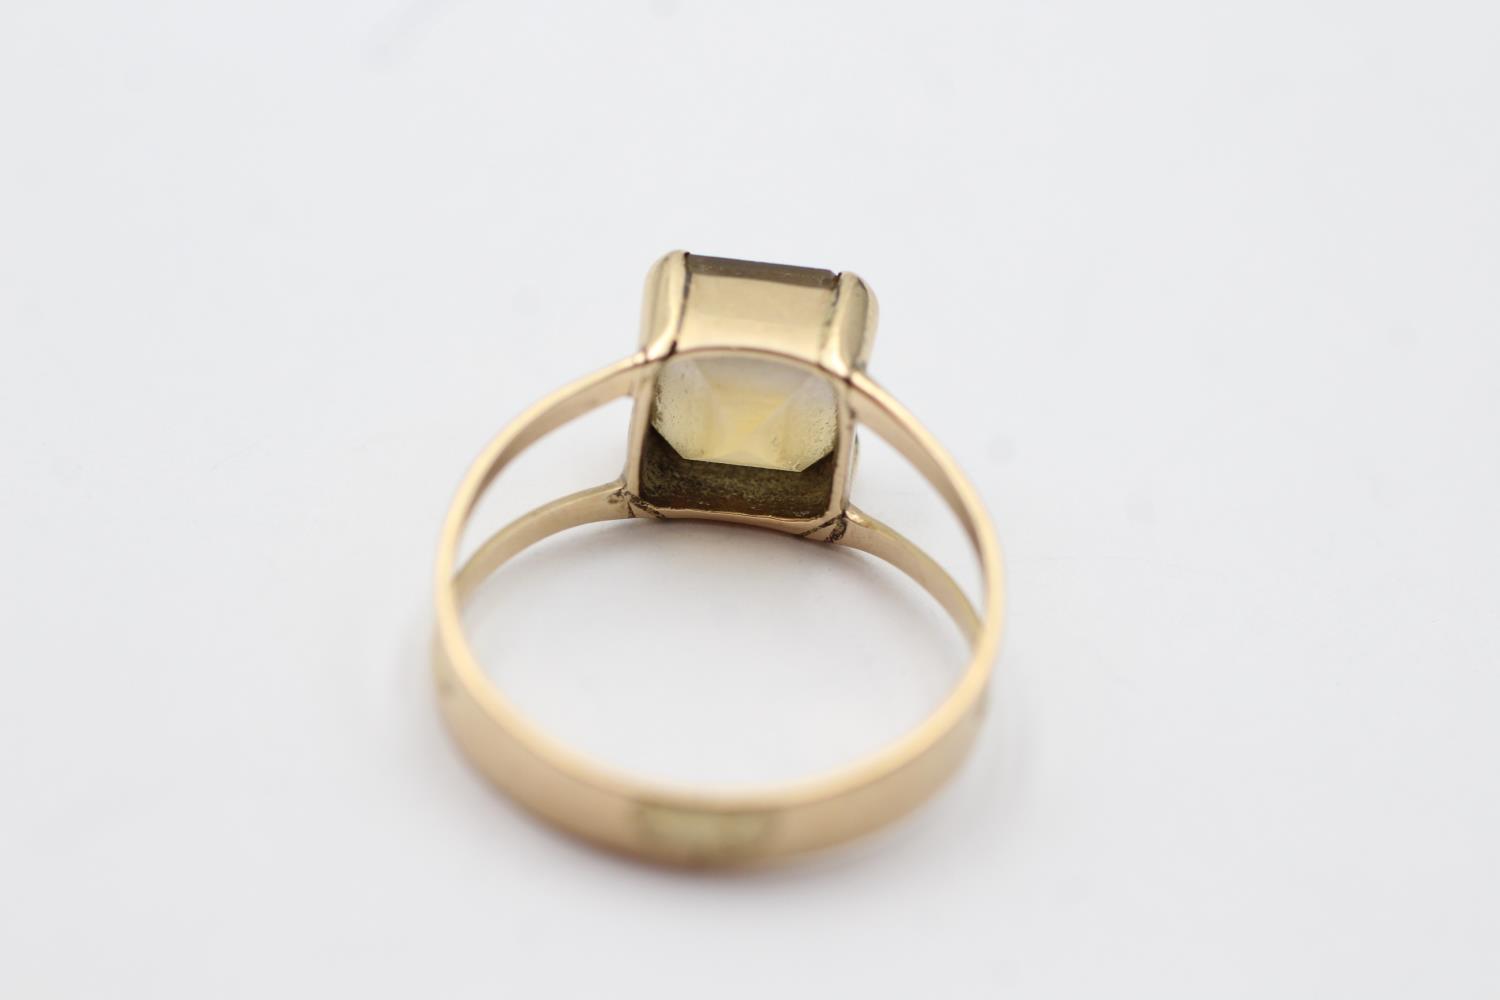 9ct gold princess cut smokey quartz solitaire ring (2.5g) size O - Image 3 of 6